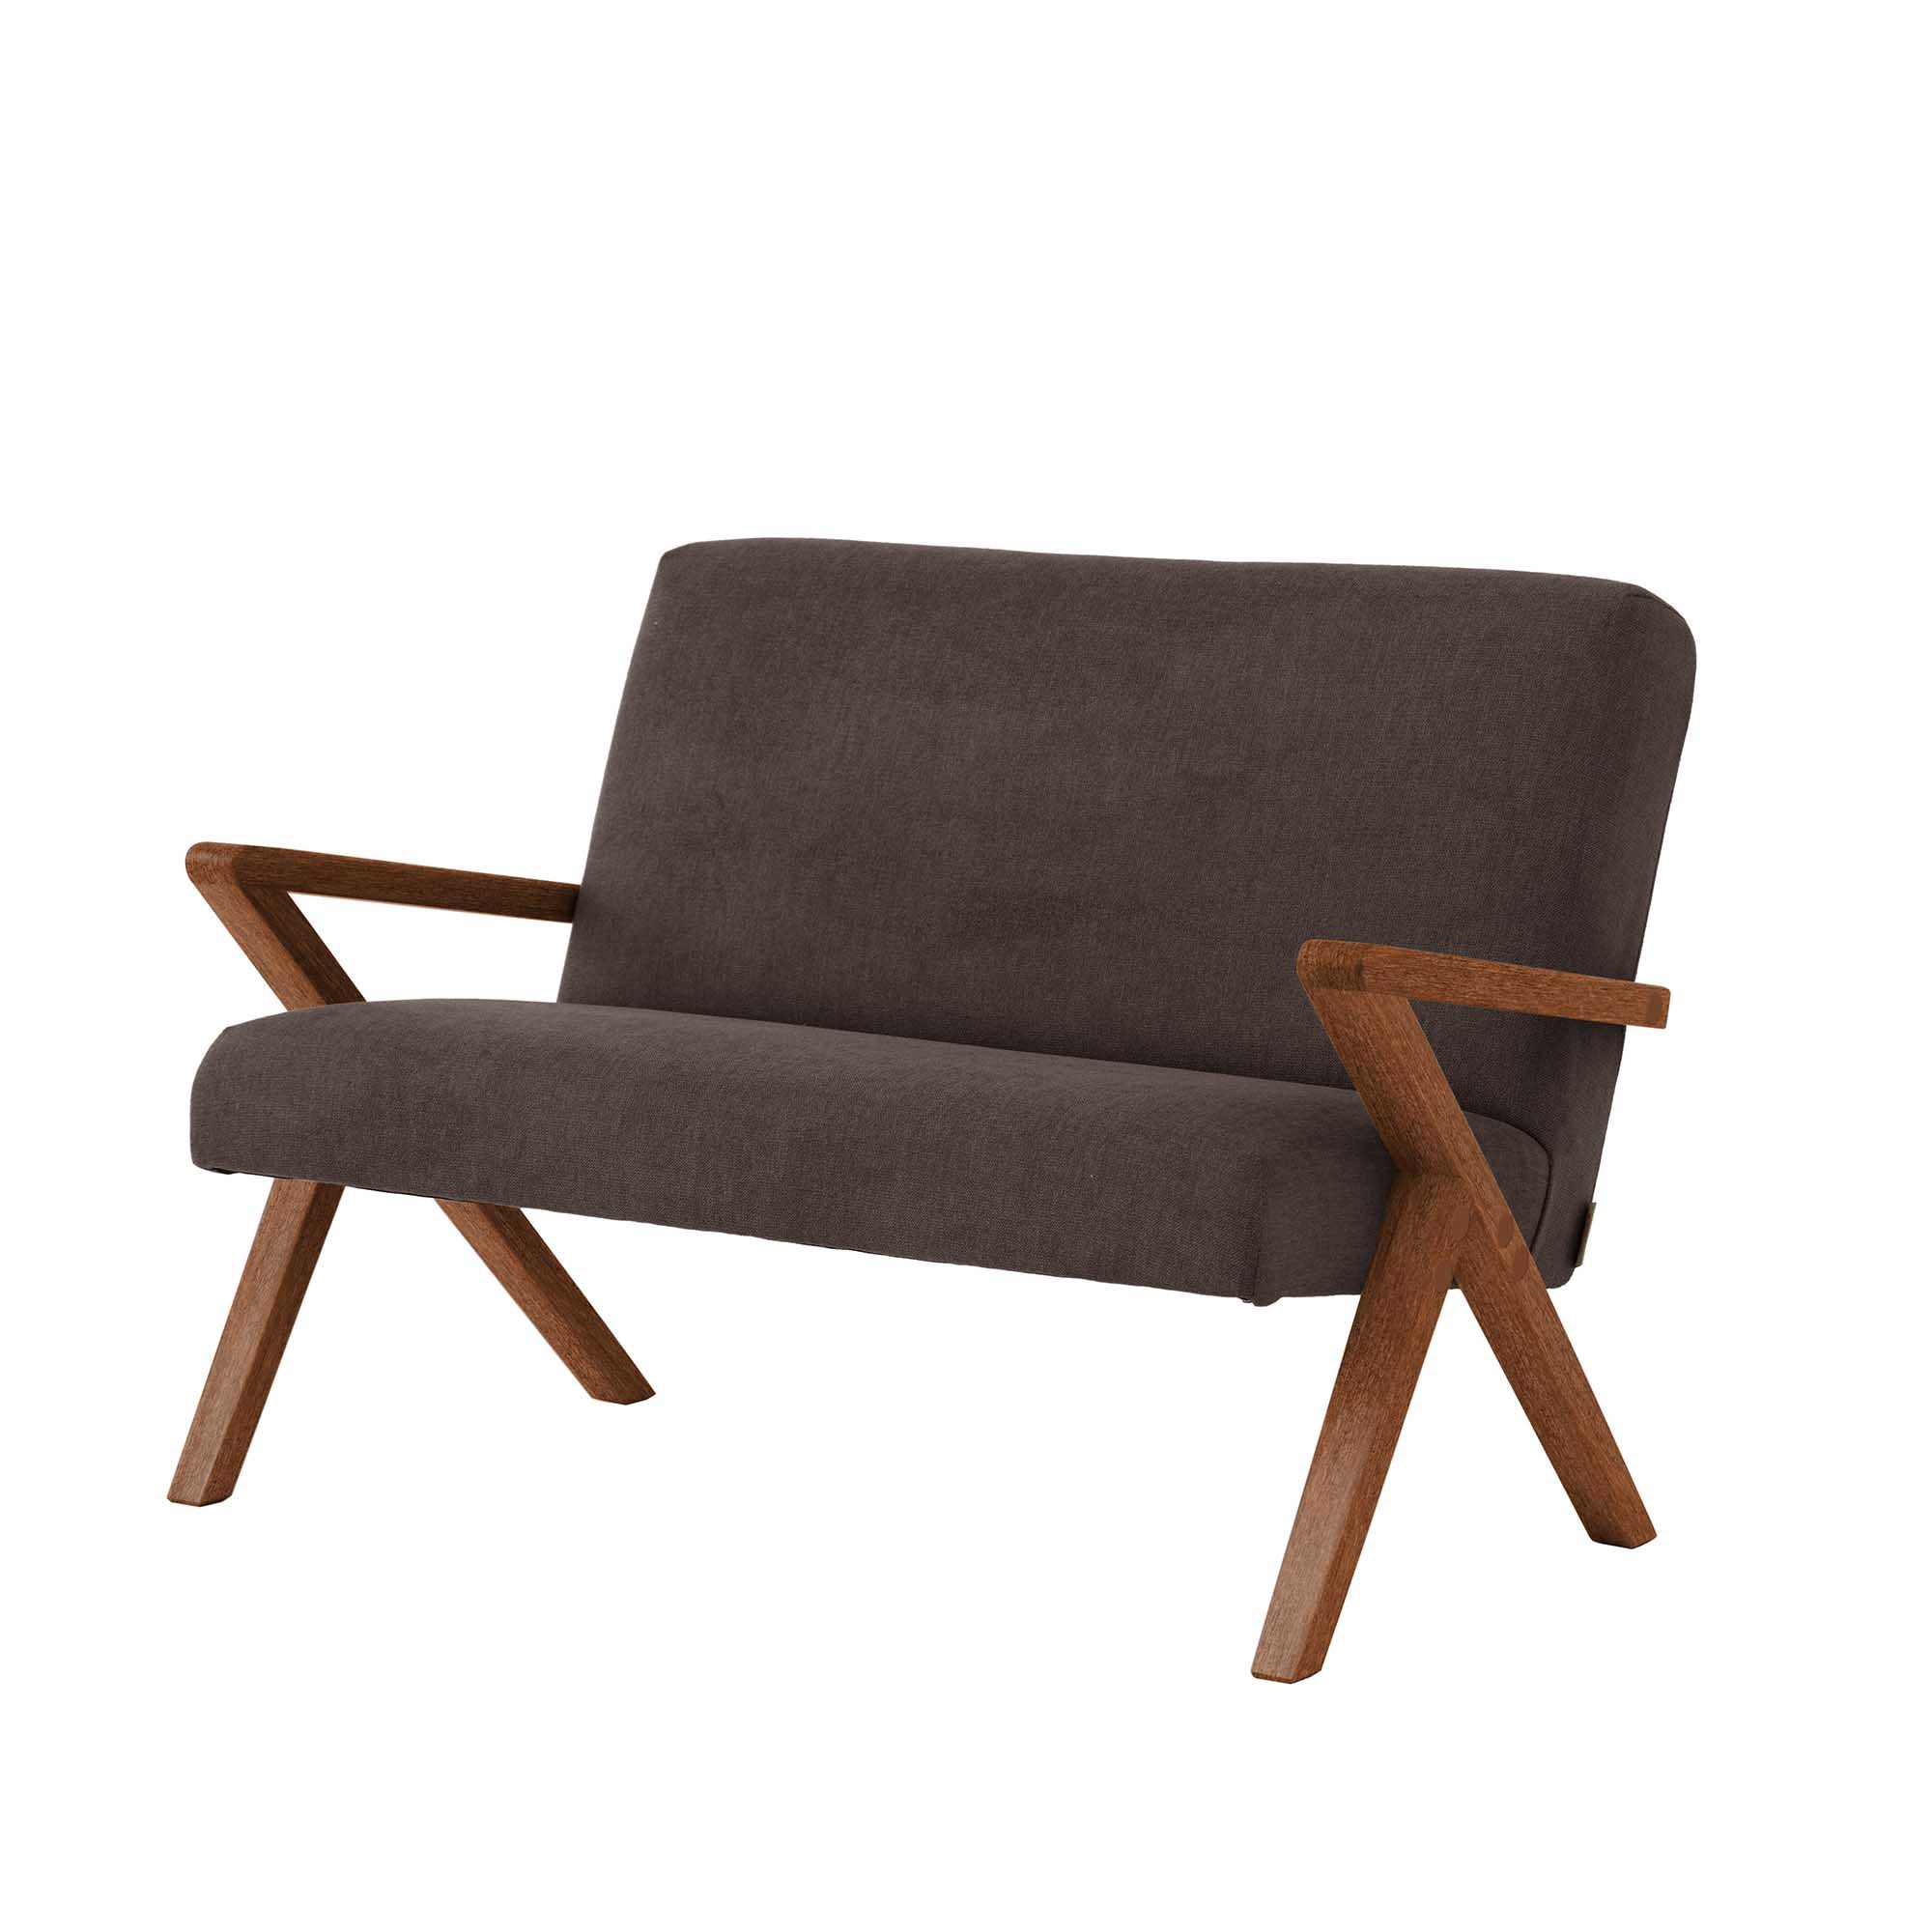  2 Seater Sofa, Beech Wood Frame, Walnut Colour, brown fabric, half-side view